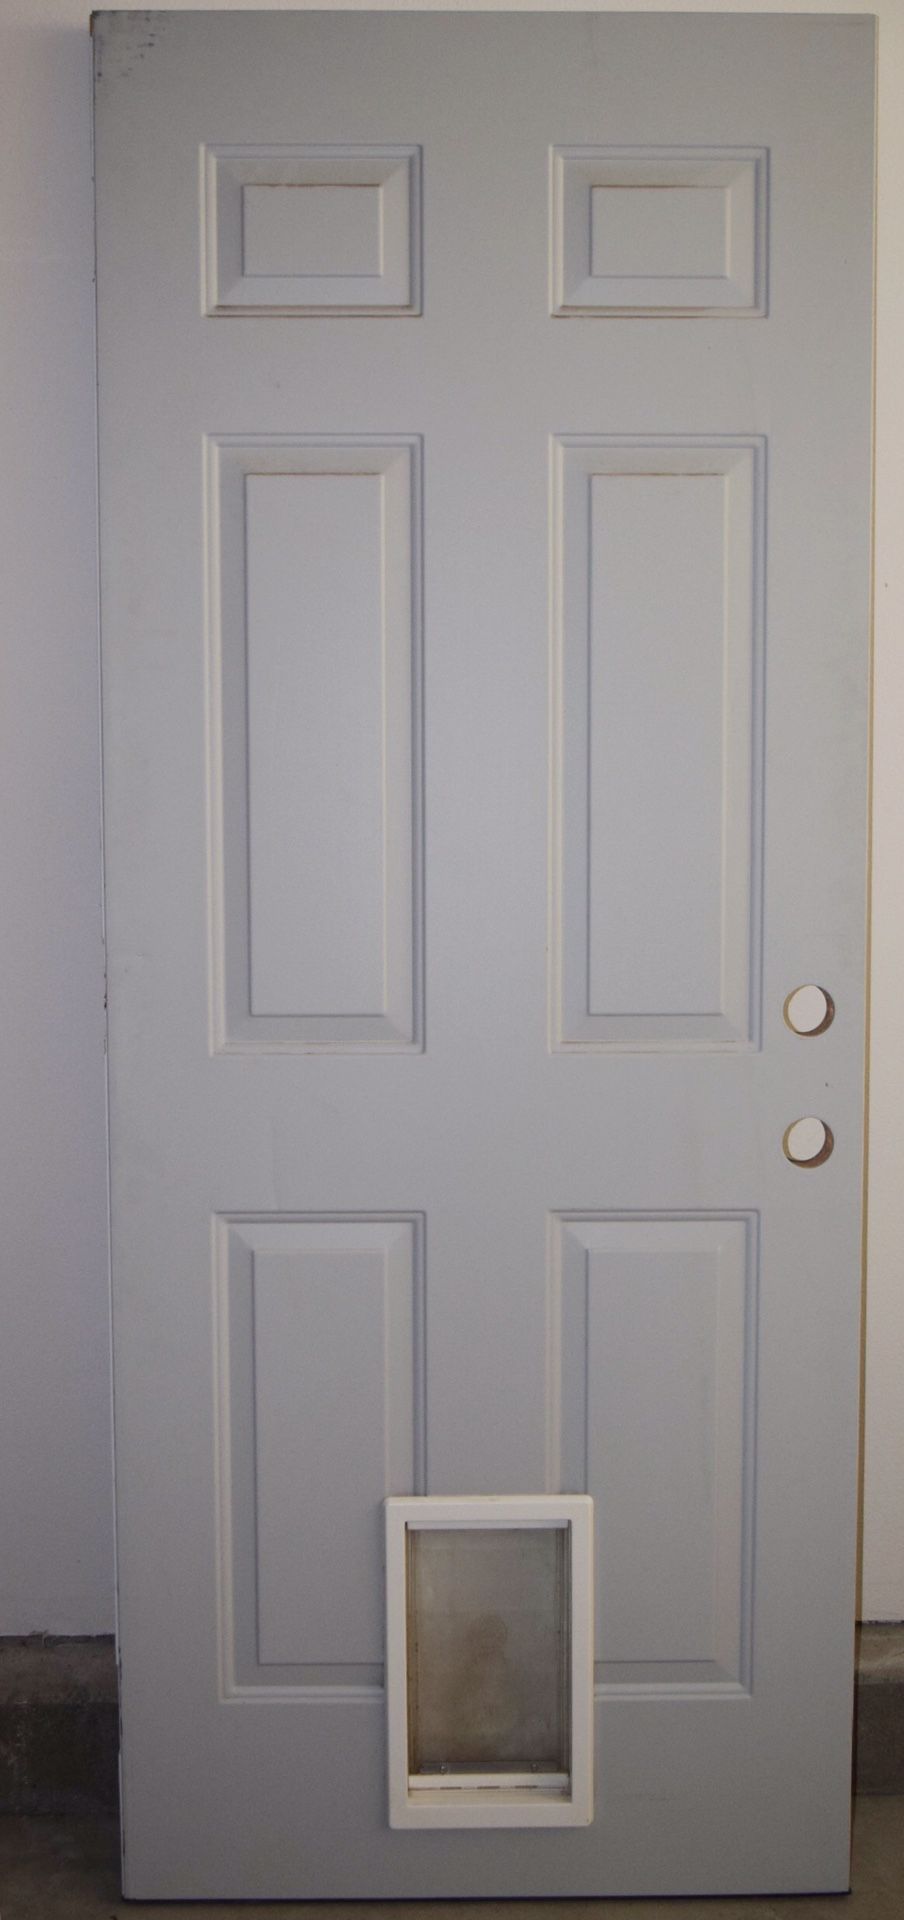 STEEL METAL DOOR Masonite Steel Metal Insulated Dog Door Pre Owned Condition See Photos for Specifications & Size